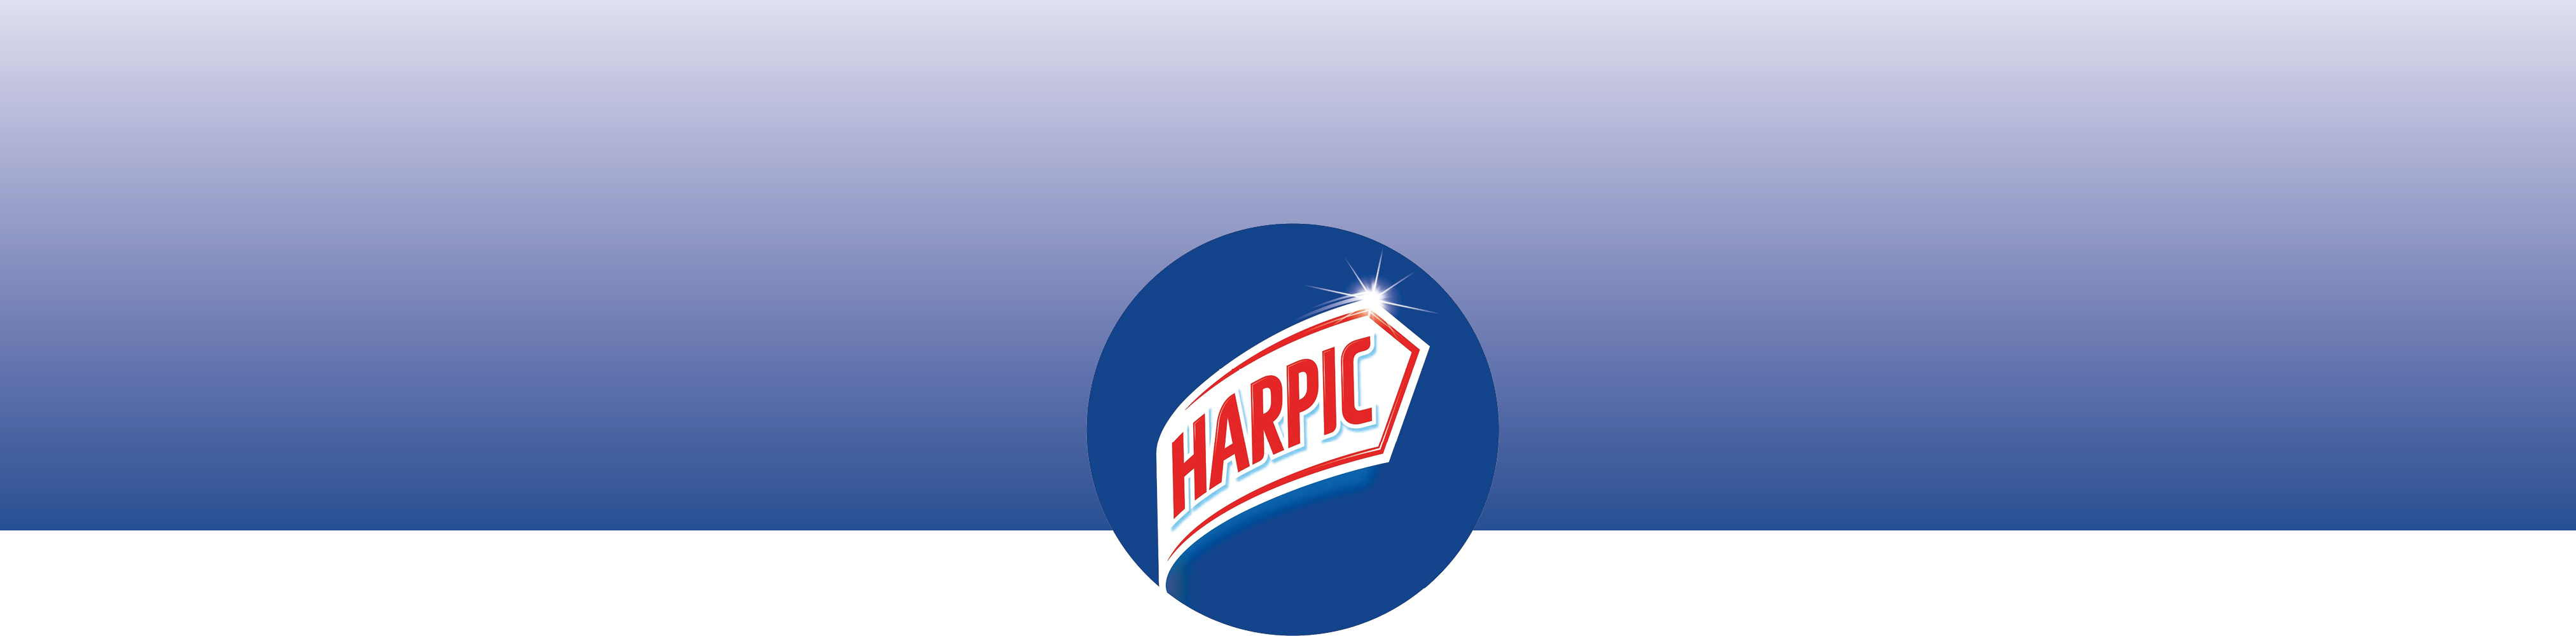 banner_harpic